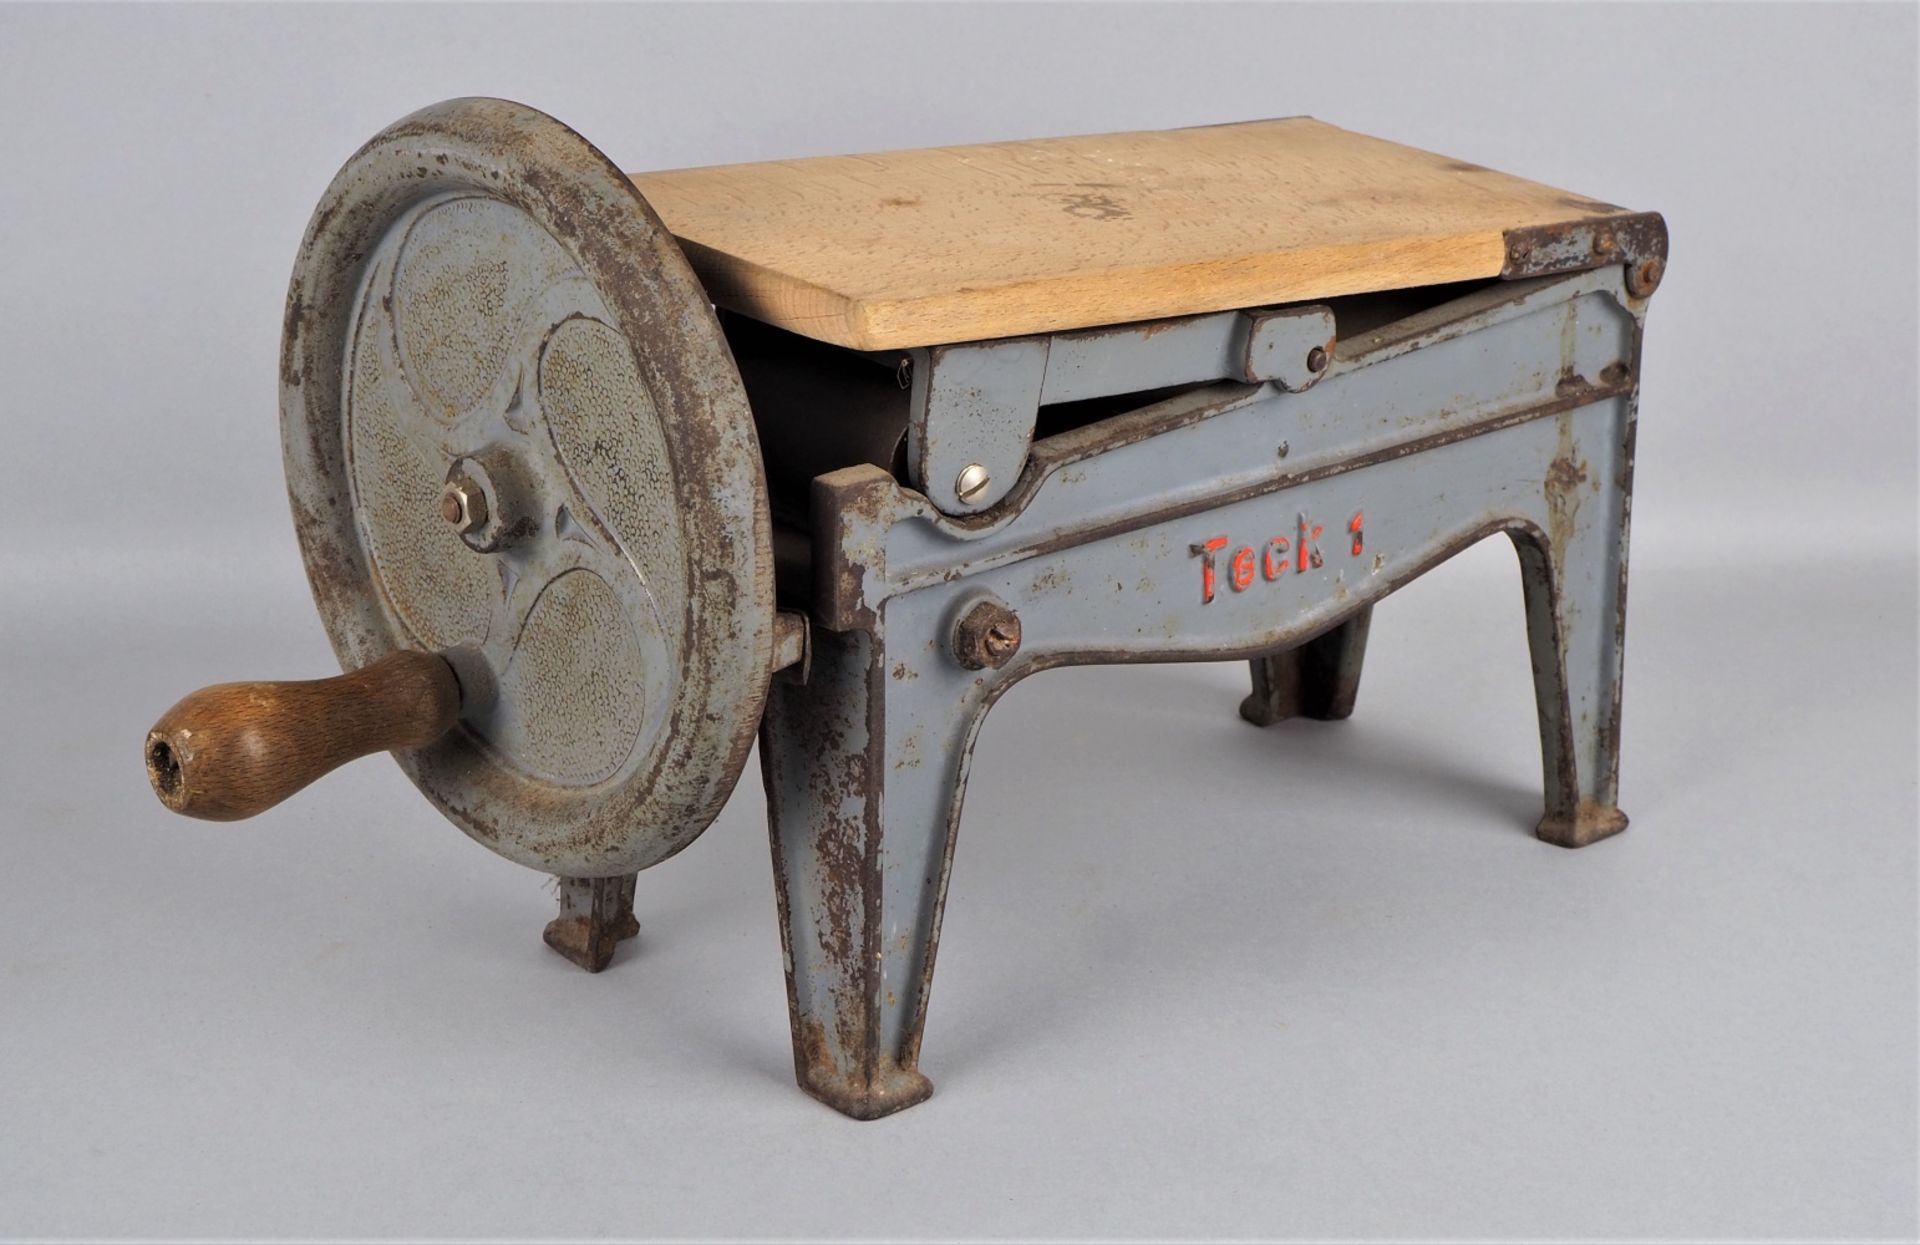 Tobacco cutter with crank, around 1900.